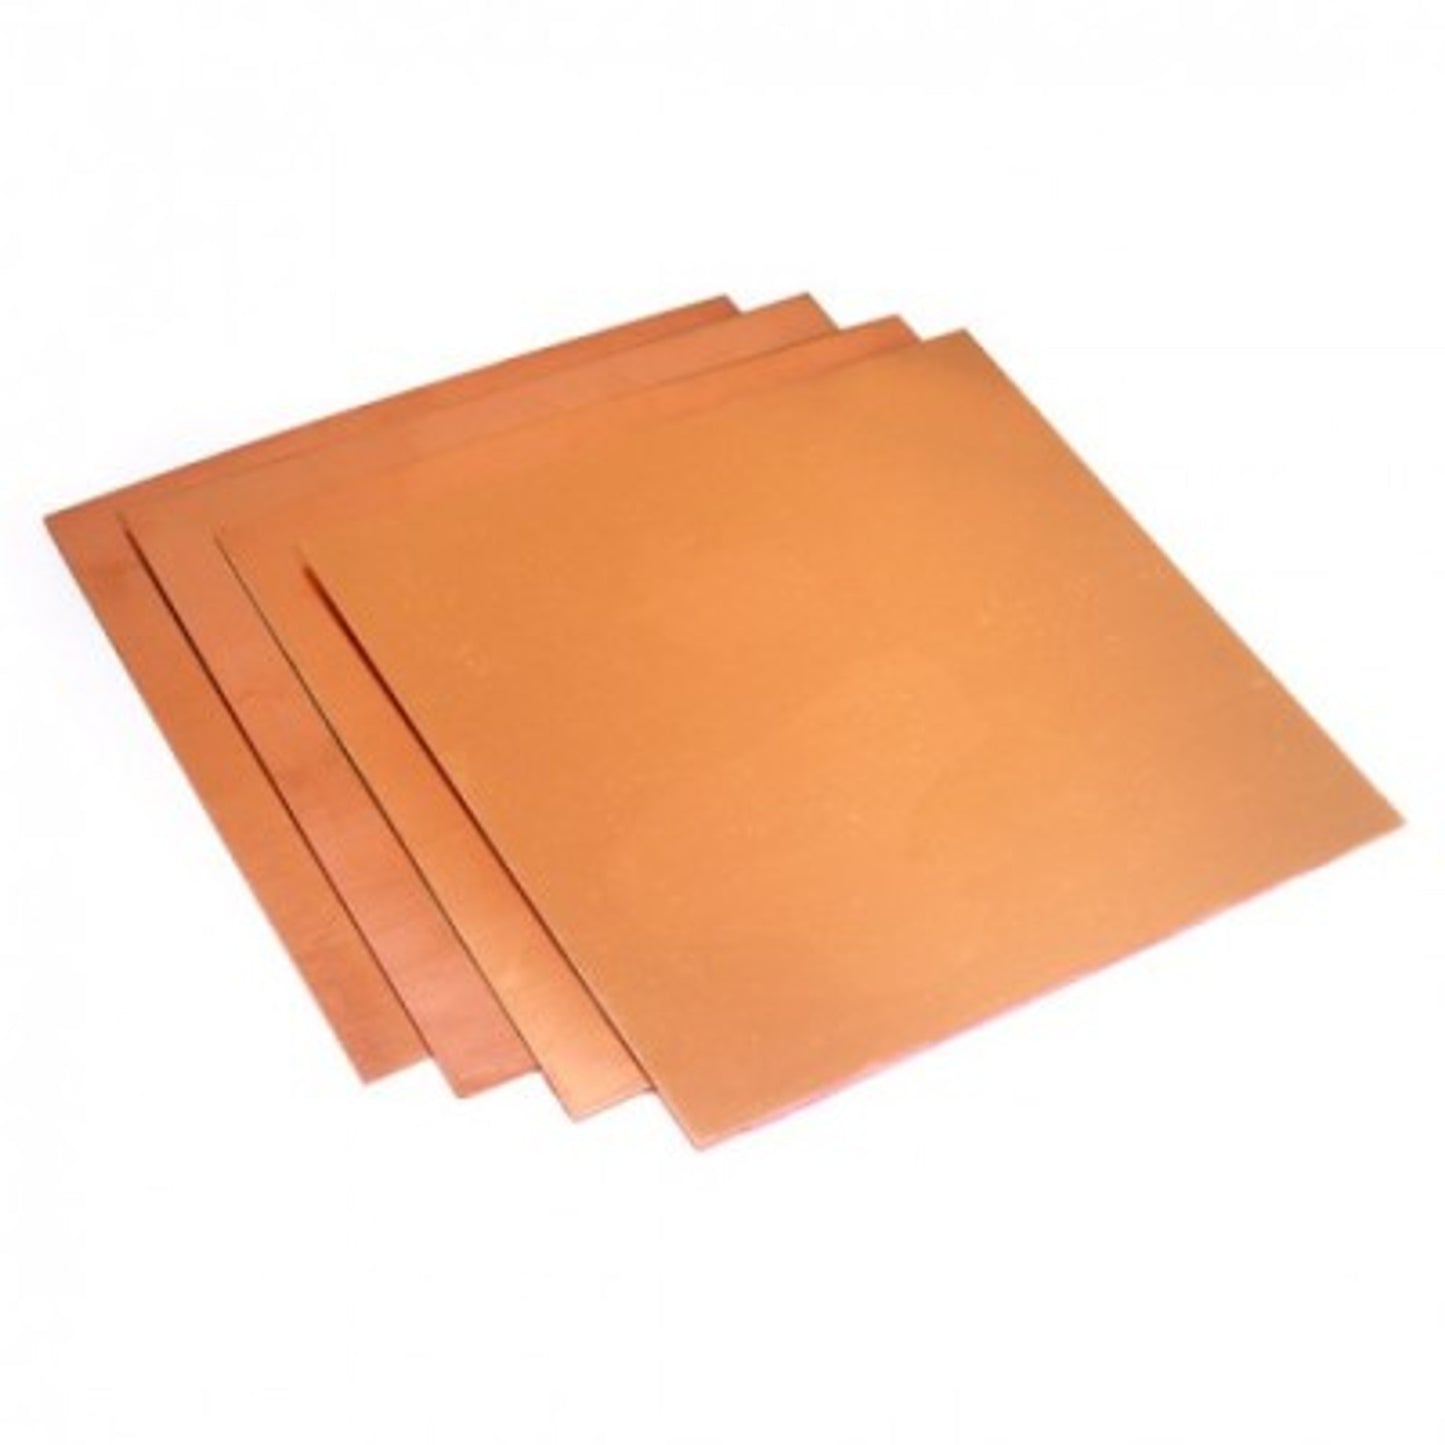 Copper Foil Sheet